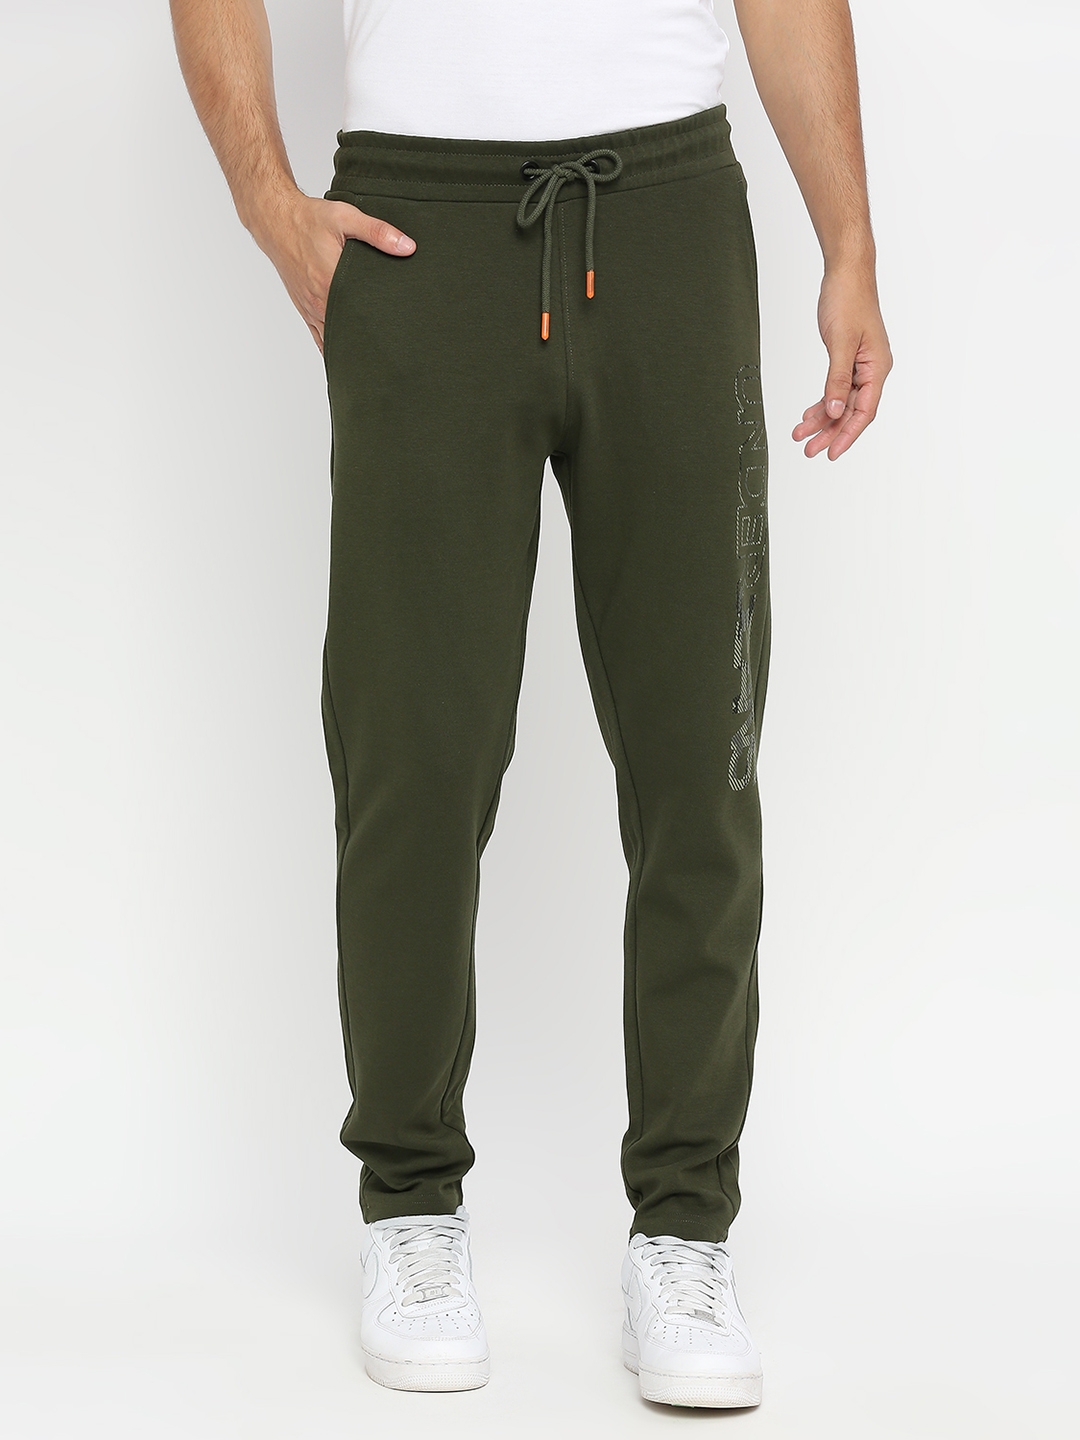 spykar | Underjeans by Spykar Men Knitted Rifle Green Cotton Pyjama 0